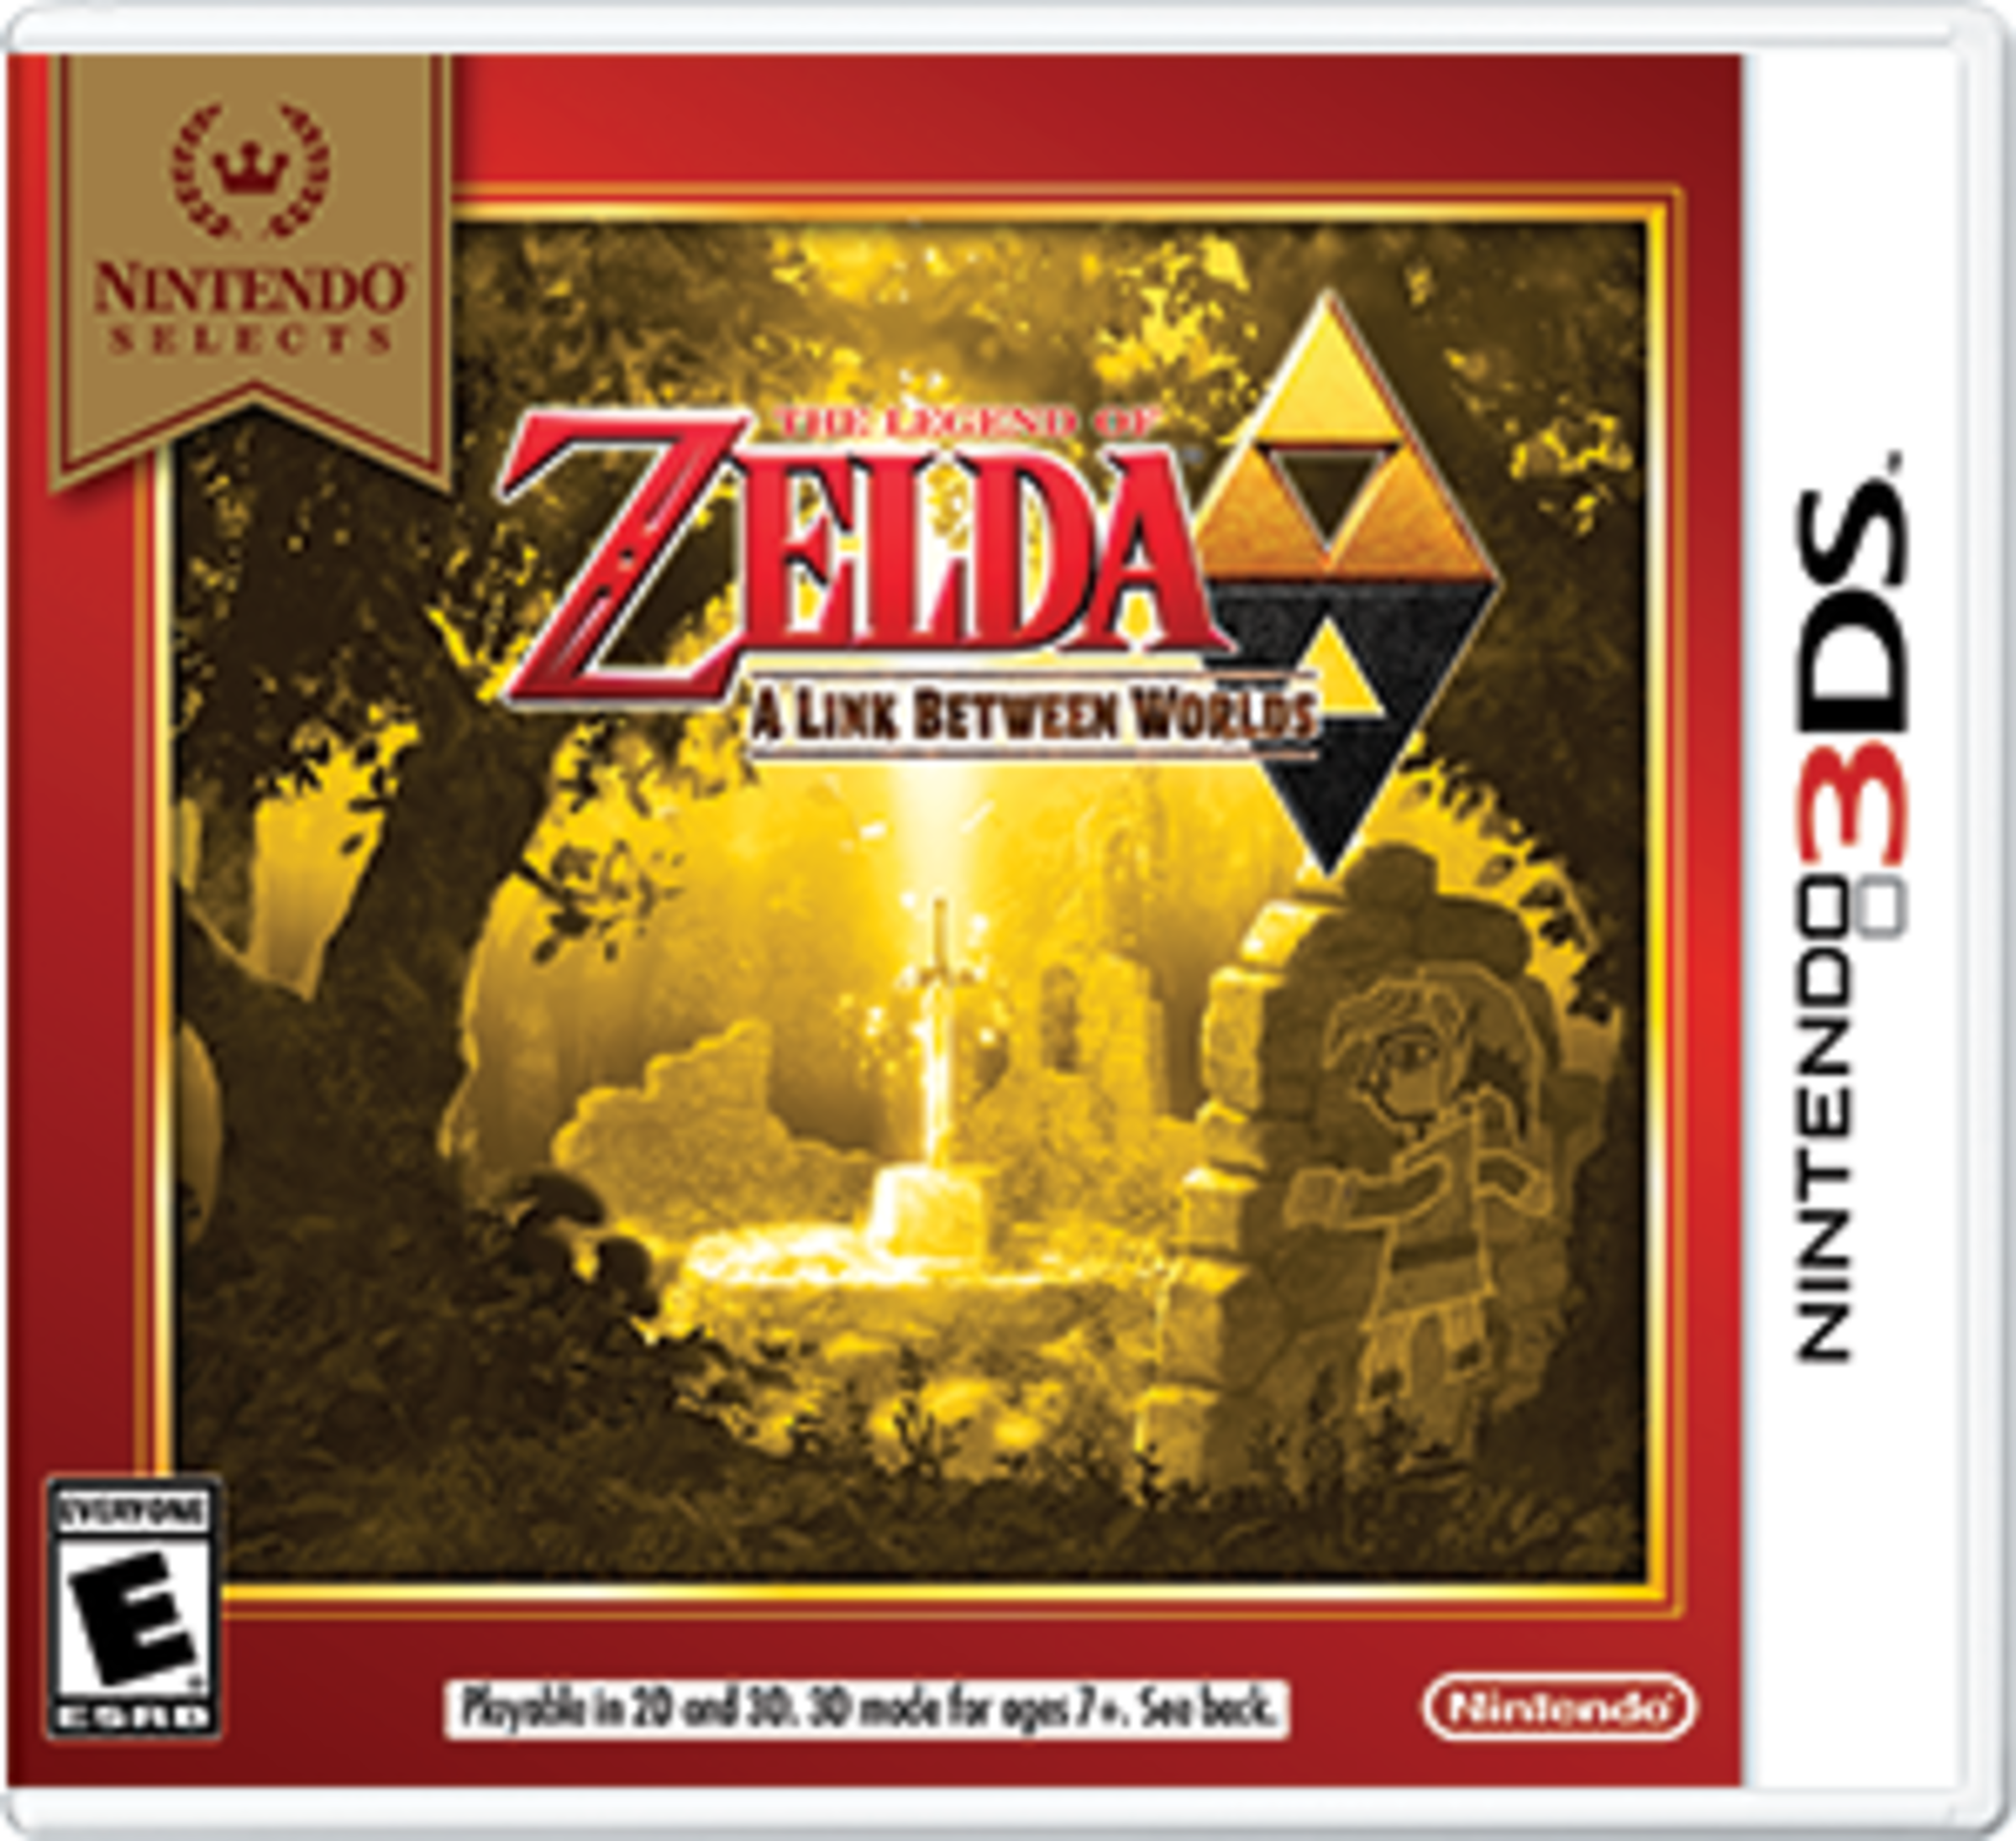 The of Zelda: A Link Between Worlds for Nintendo 3DS - Official